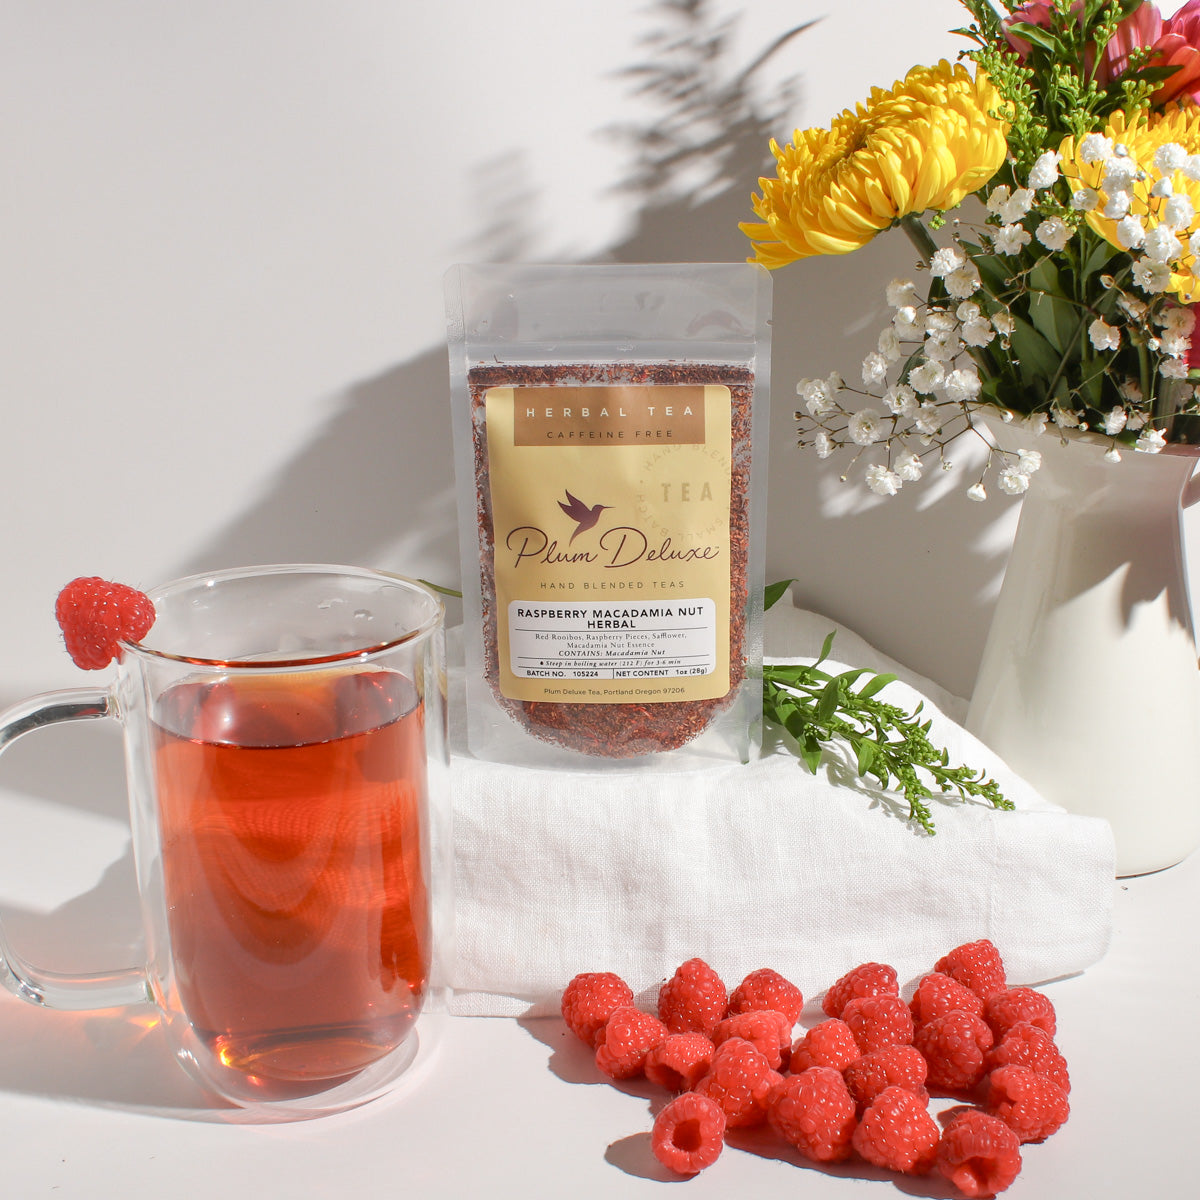 Raspberry Macadamia Nut Herbal Tea